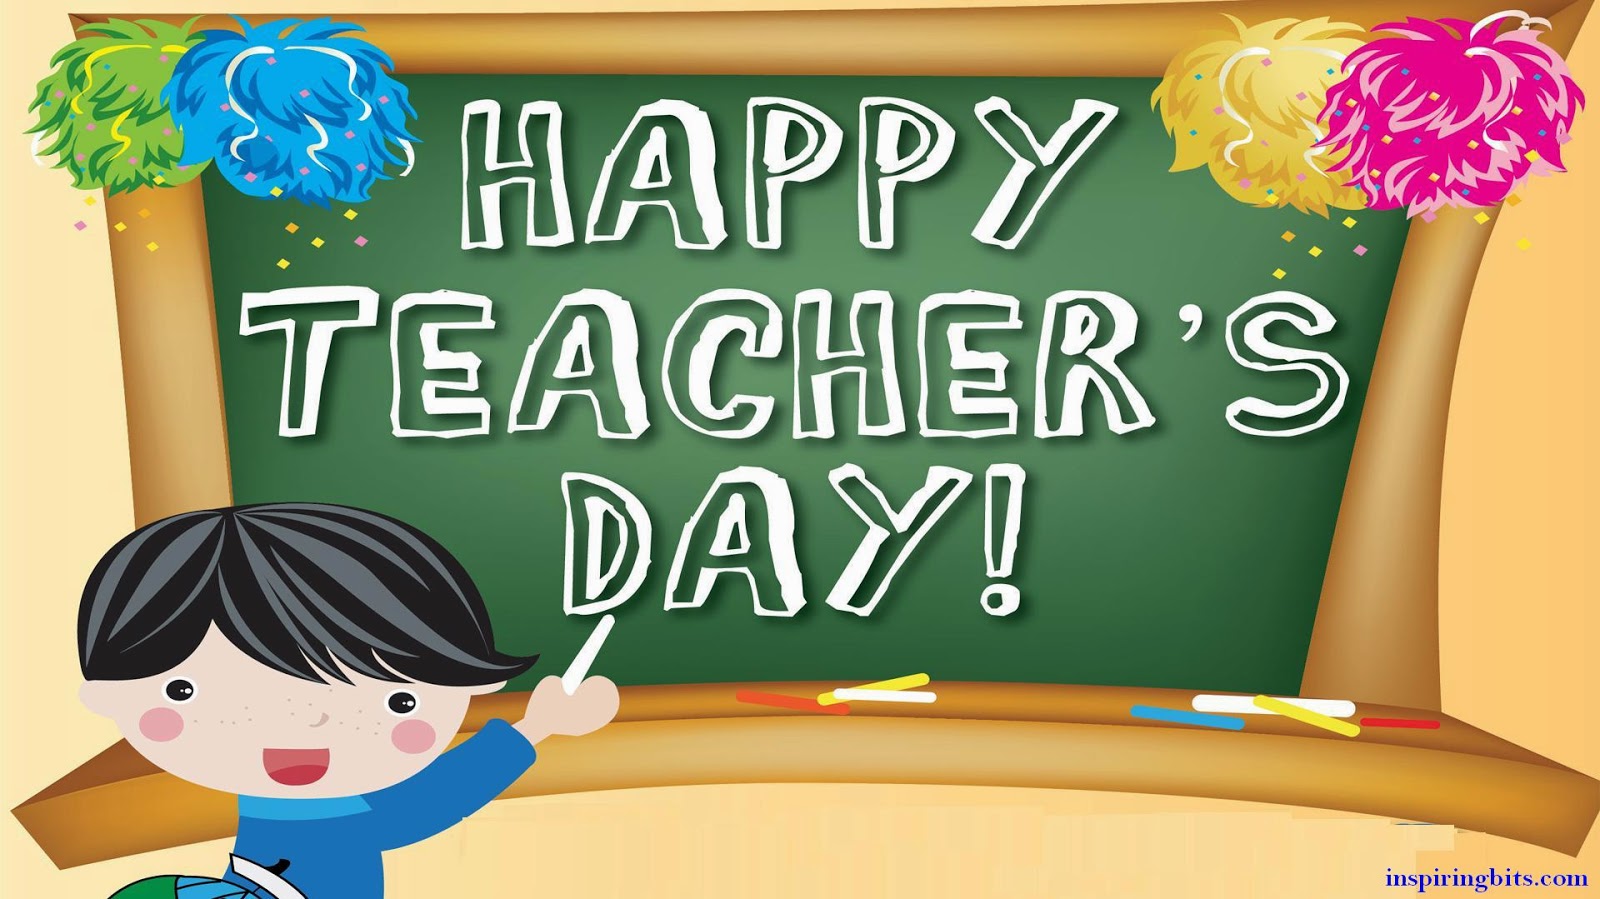 Wish you a Happy Teacher’s Day SA POST